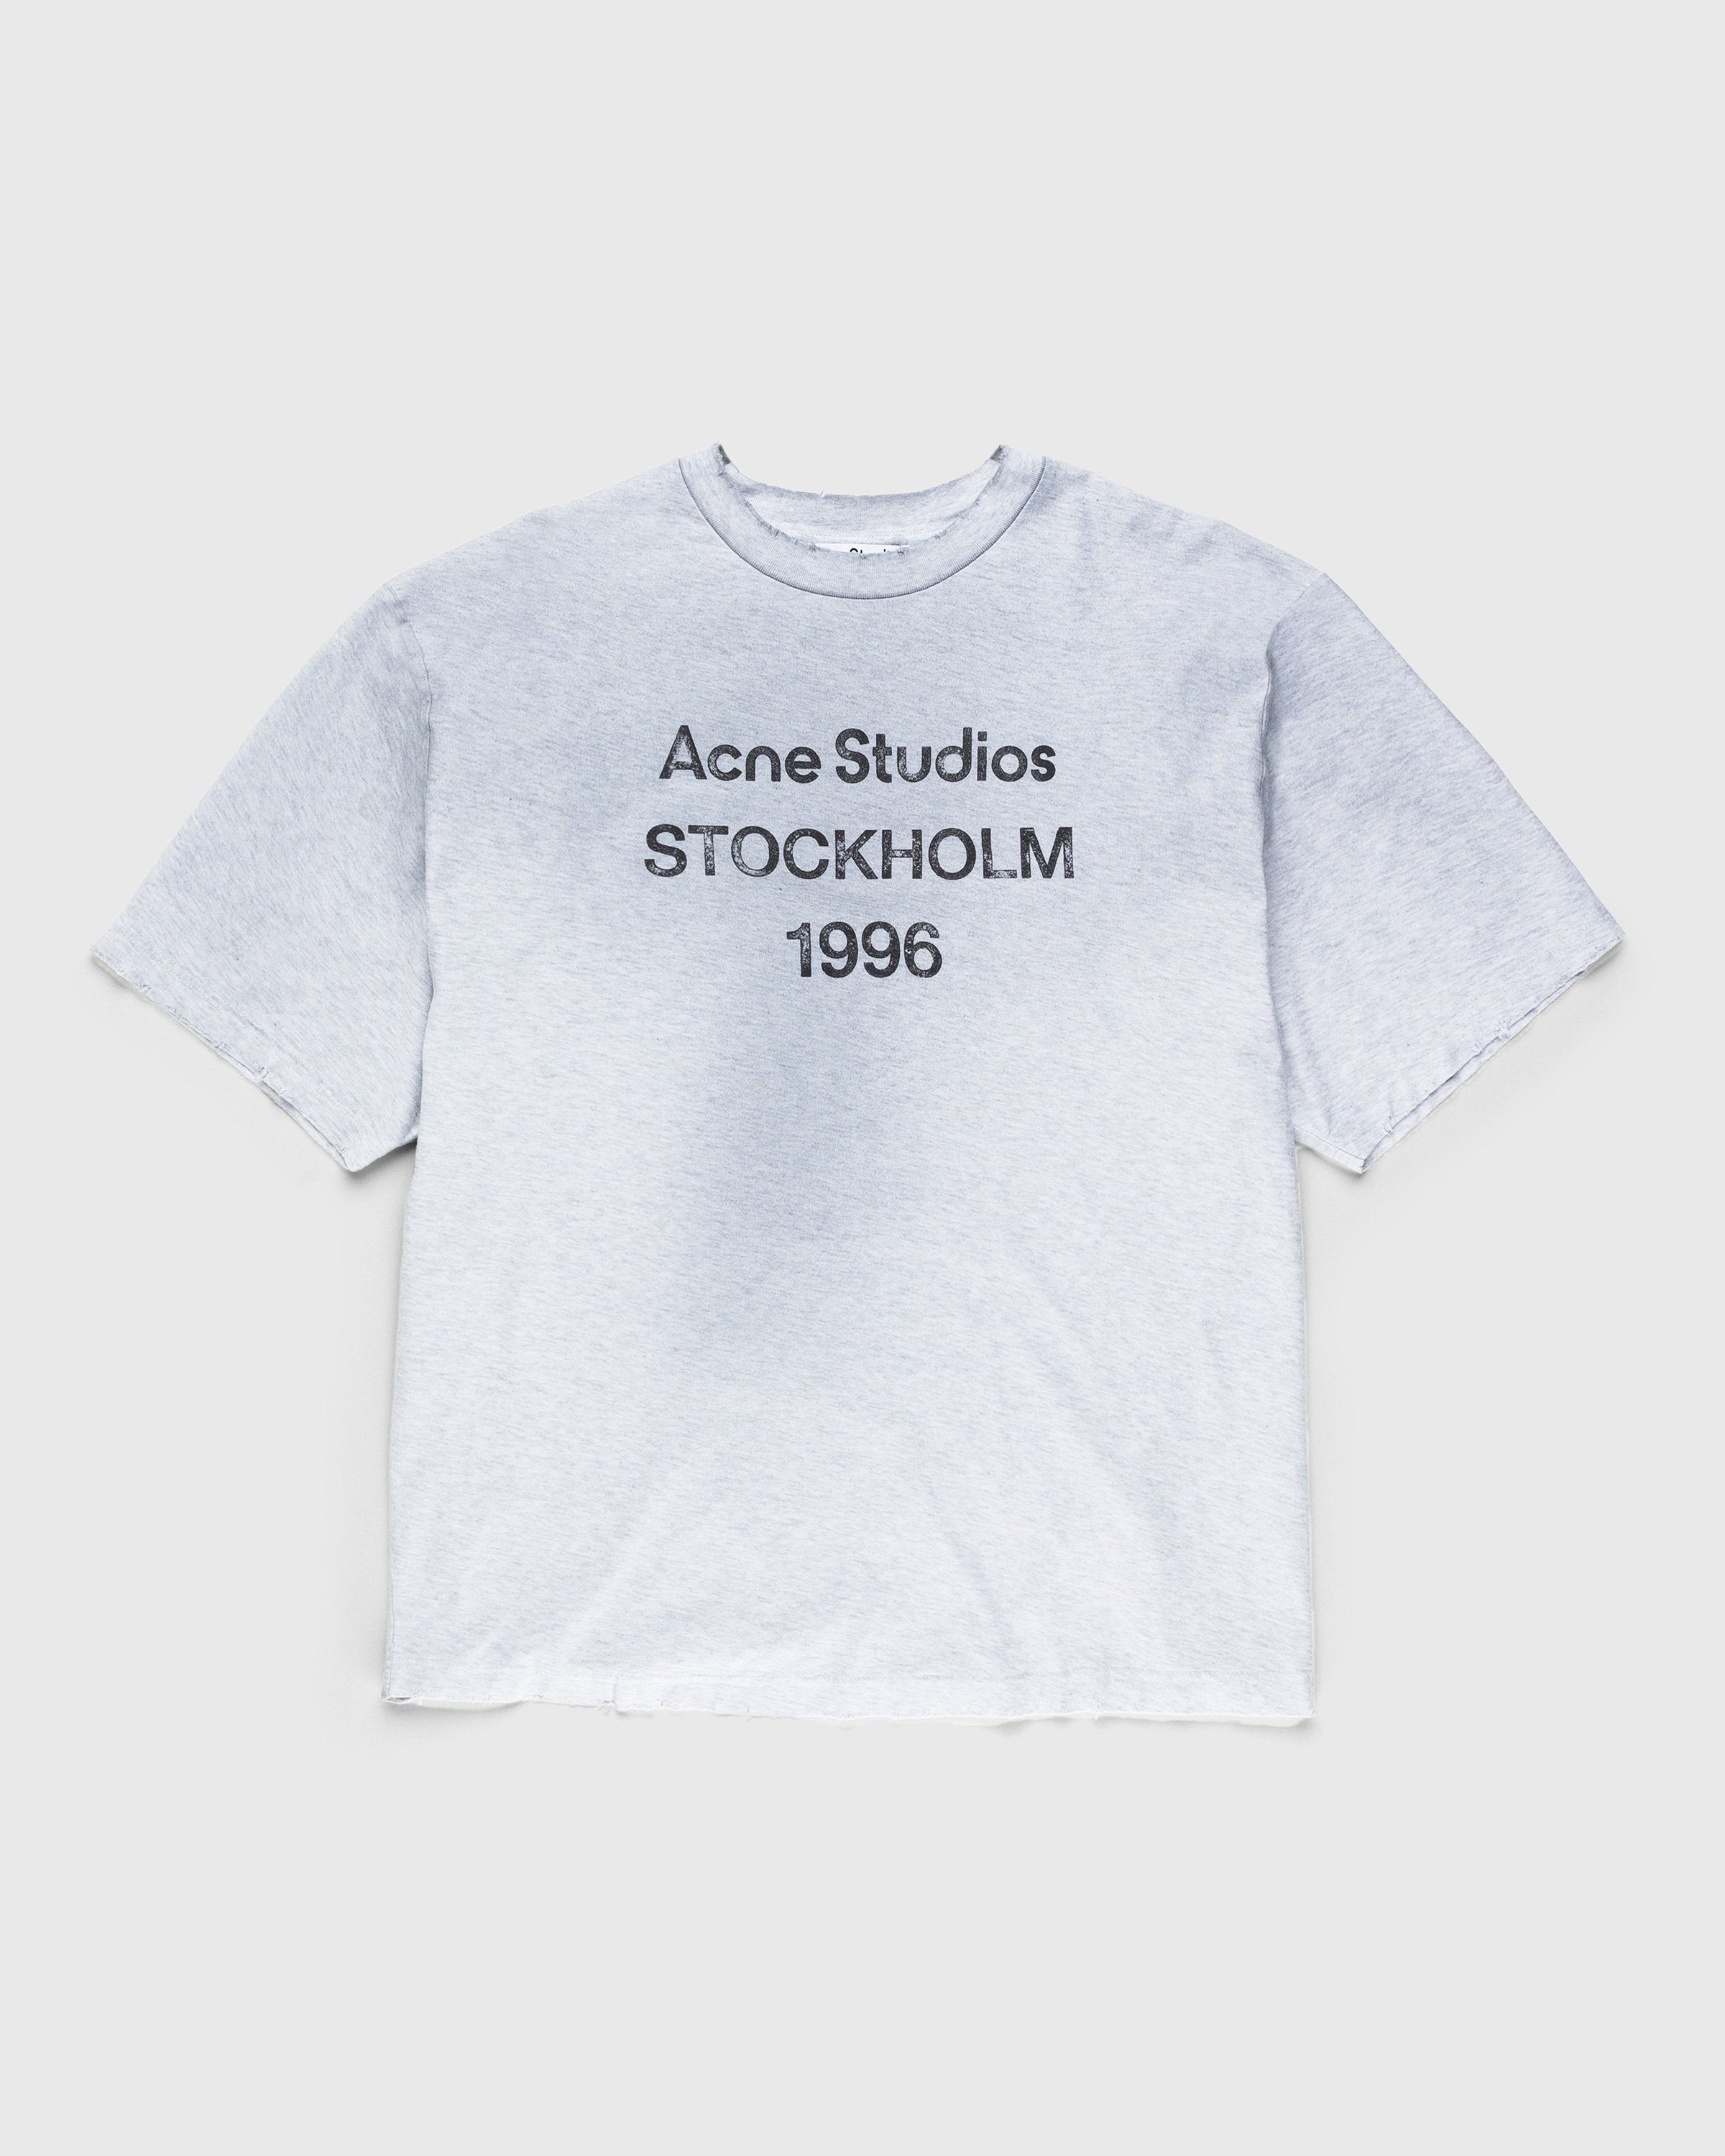 Acne Studios - Stockholm 1996 T-Shirt Grey - Clothing - Grey - Image 1